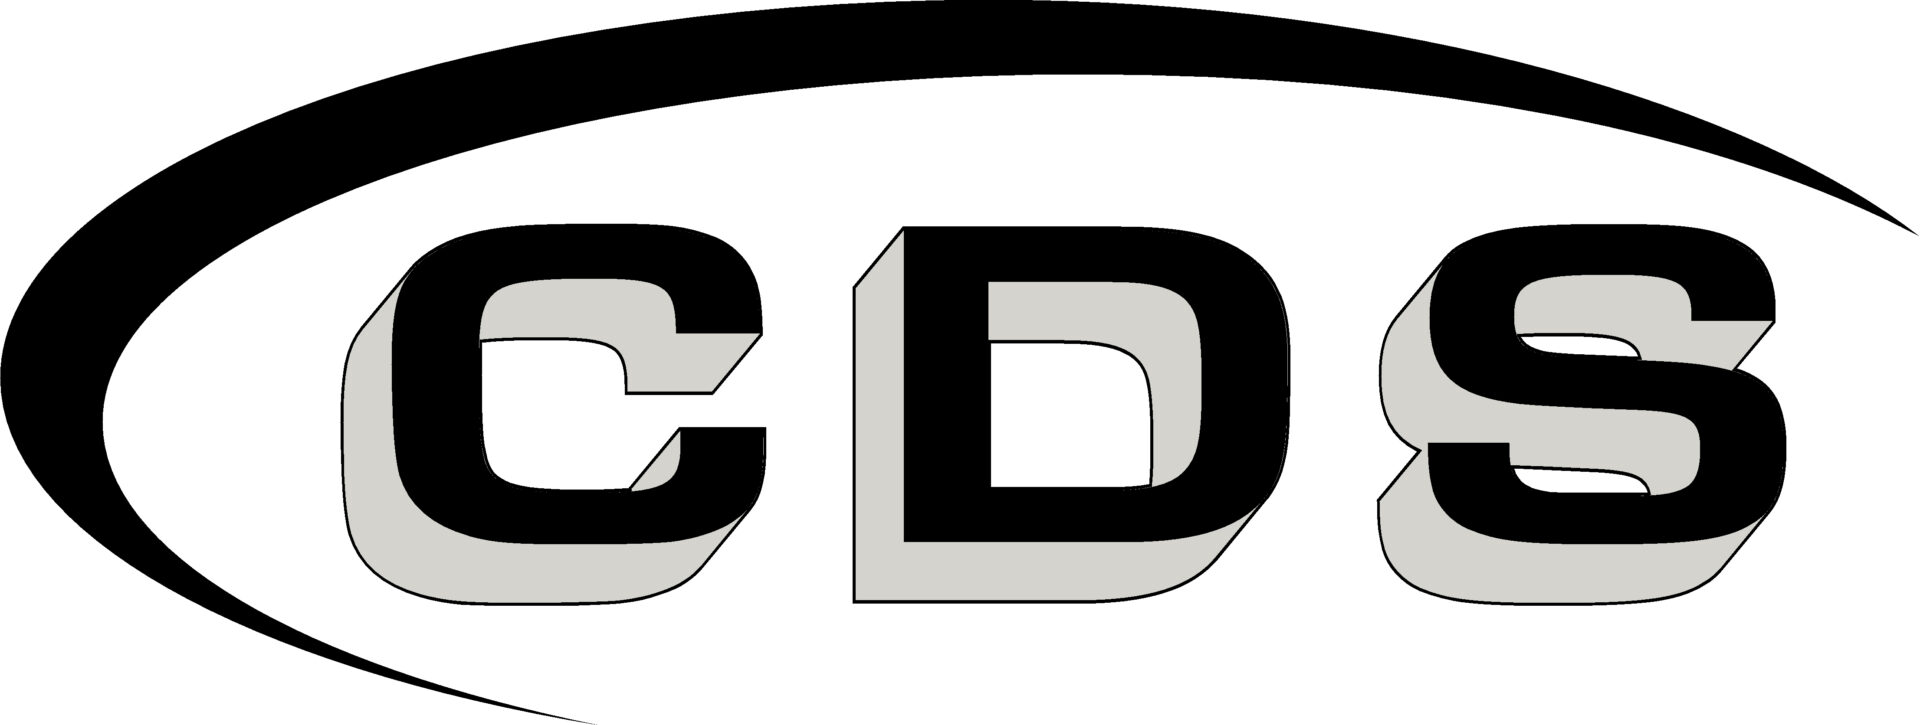 CDS_Logo_02-21-13 (3)